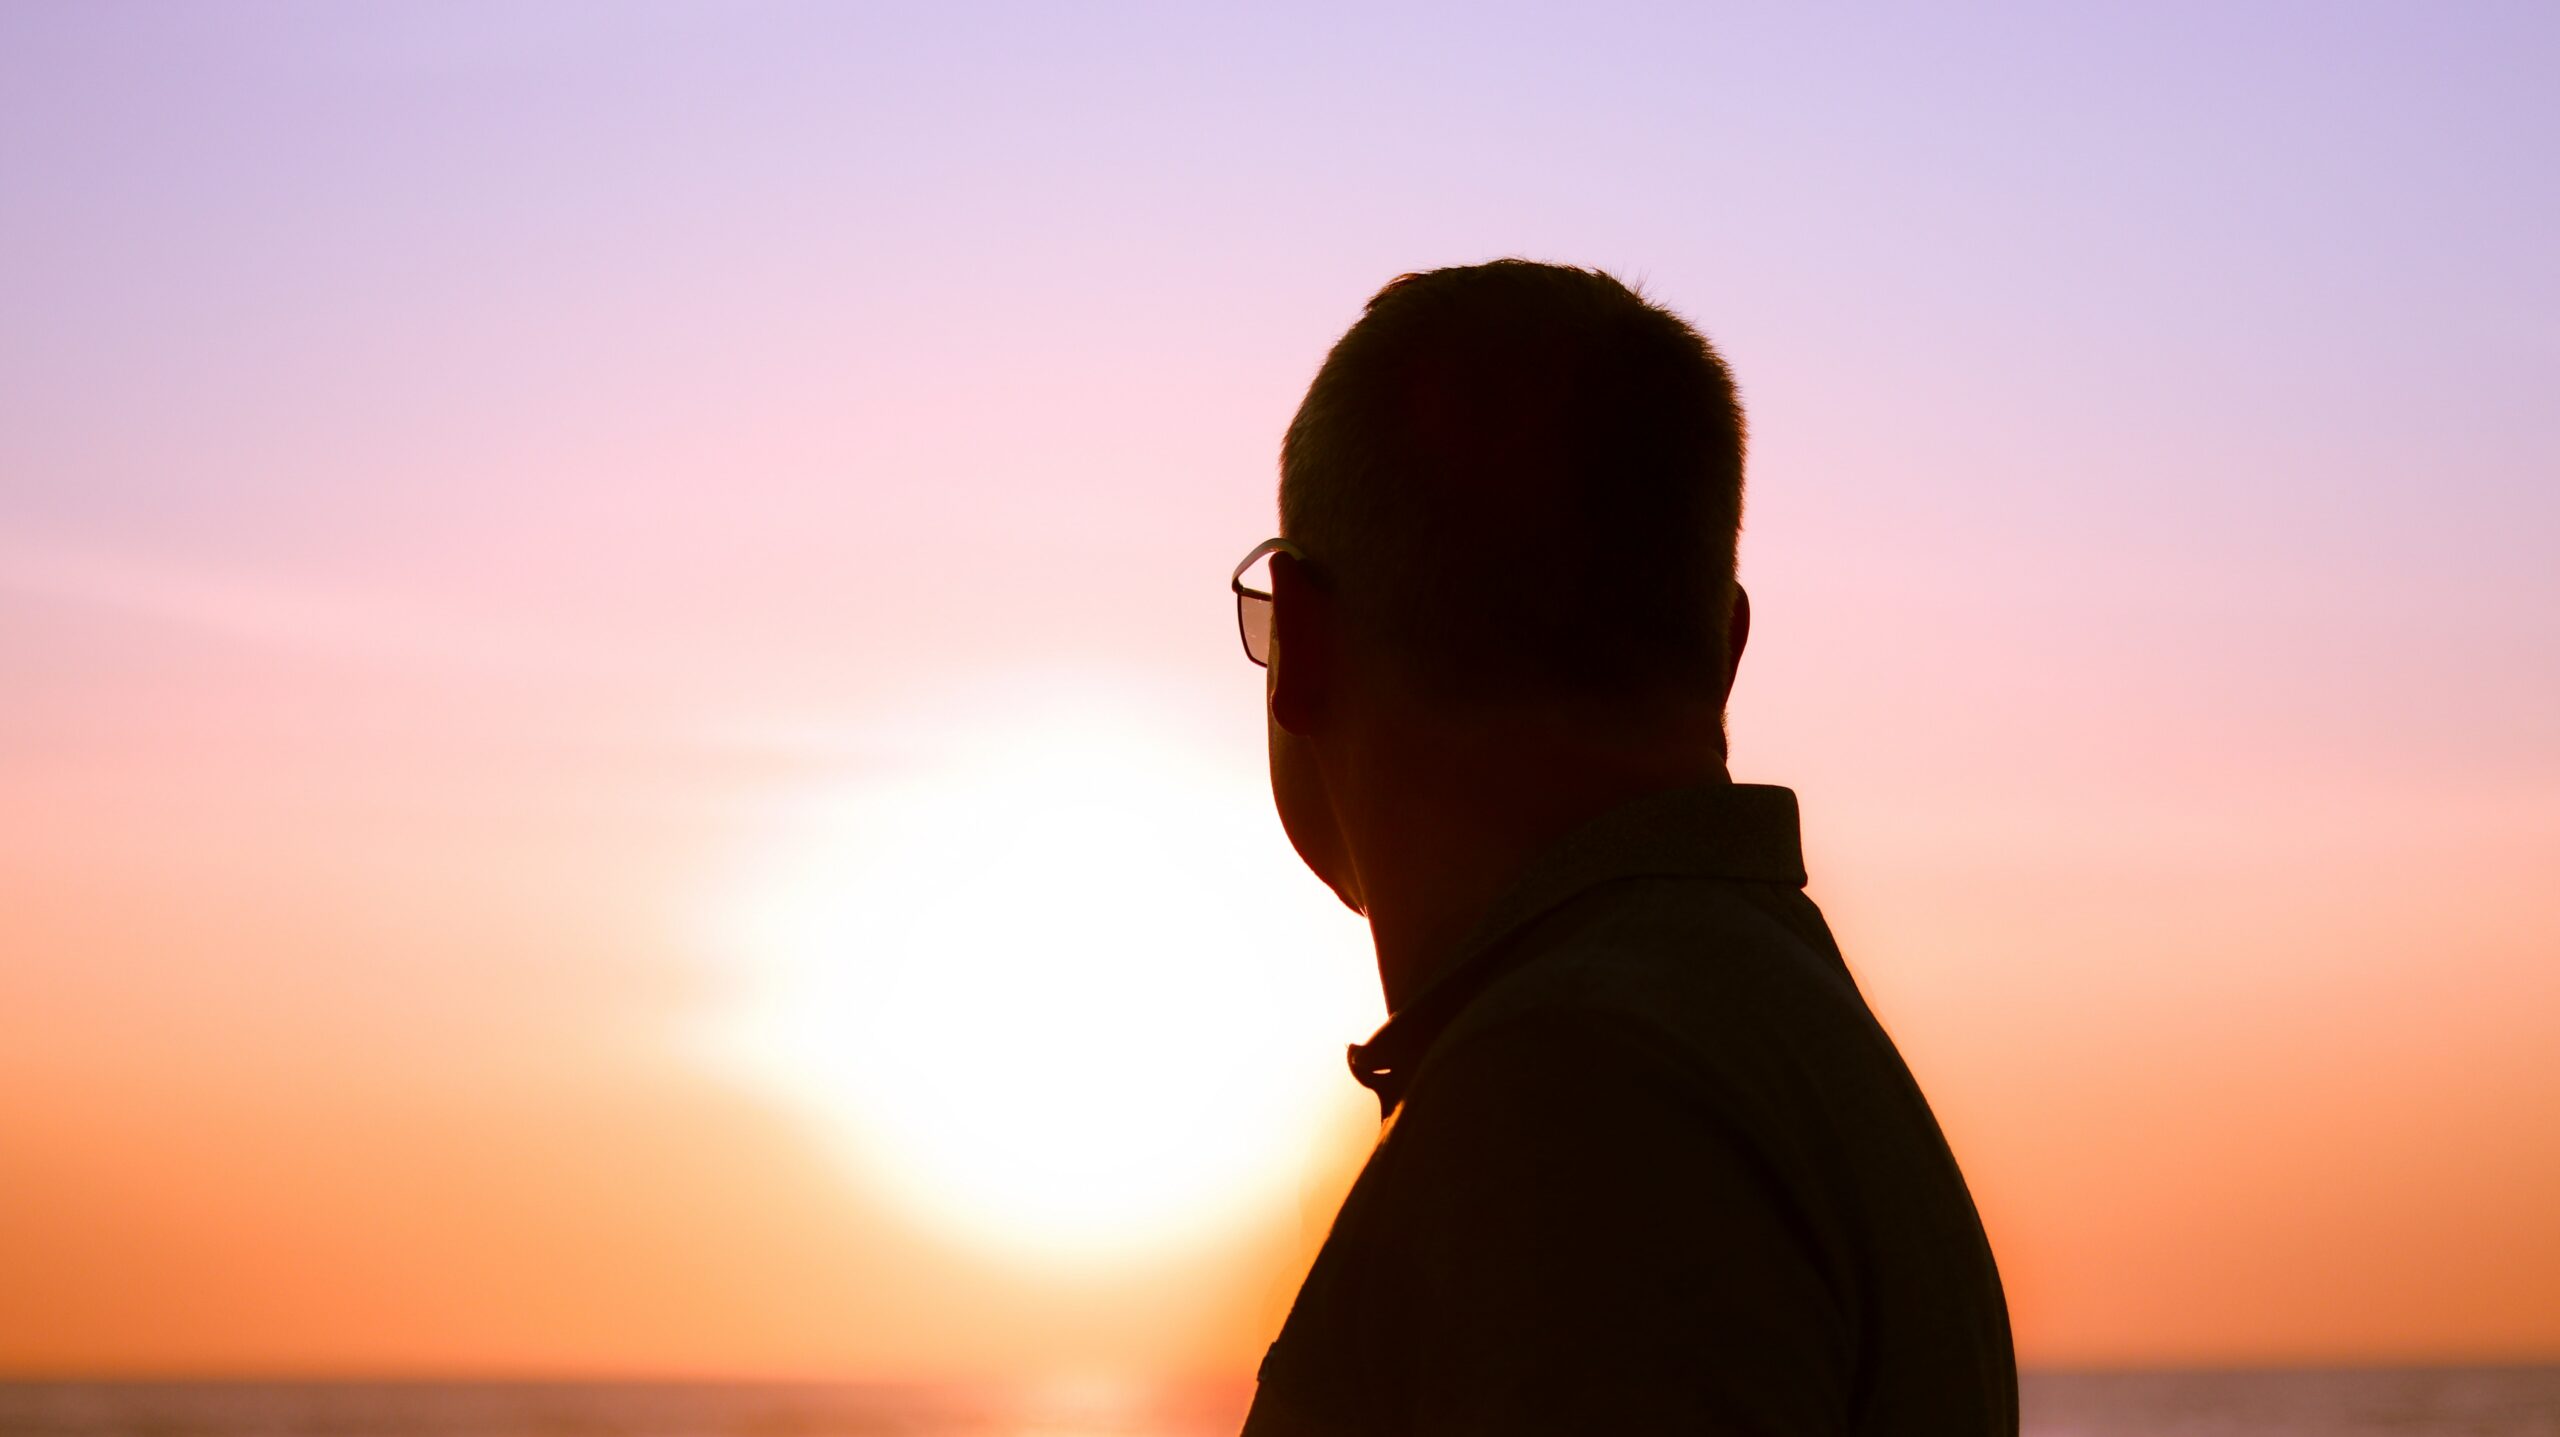 A man looking towards the sun